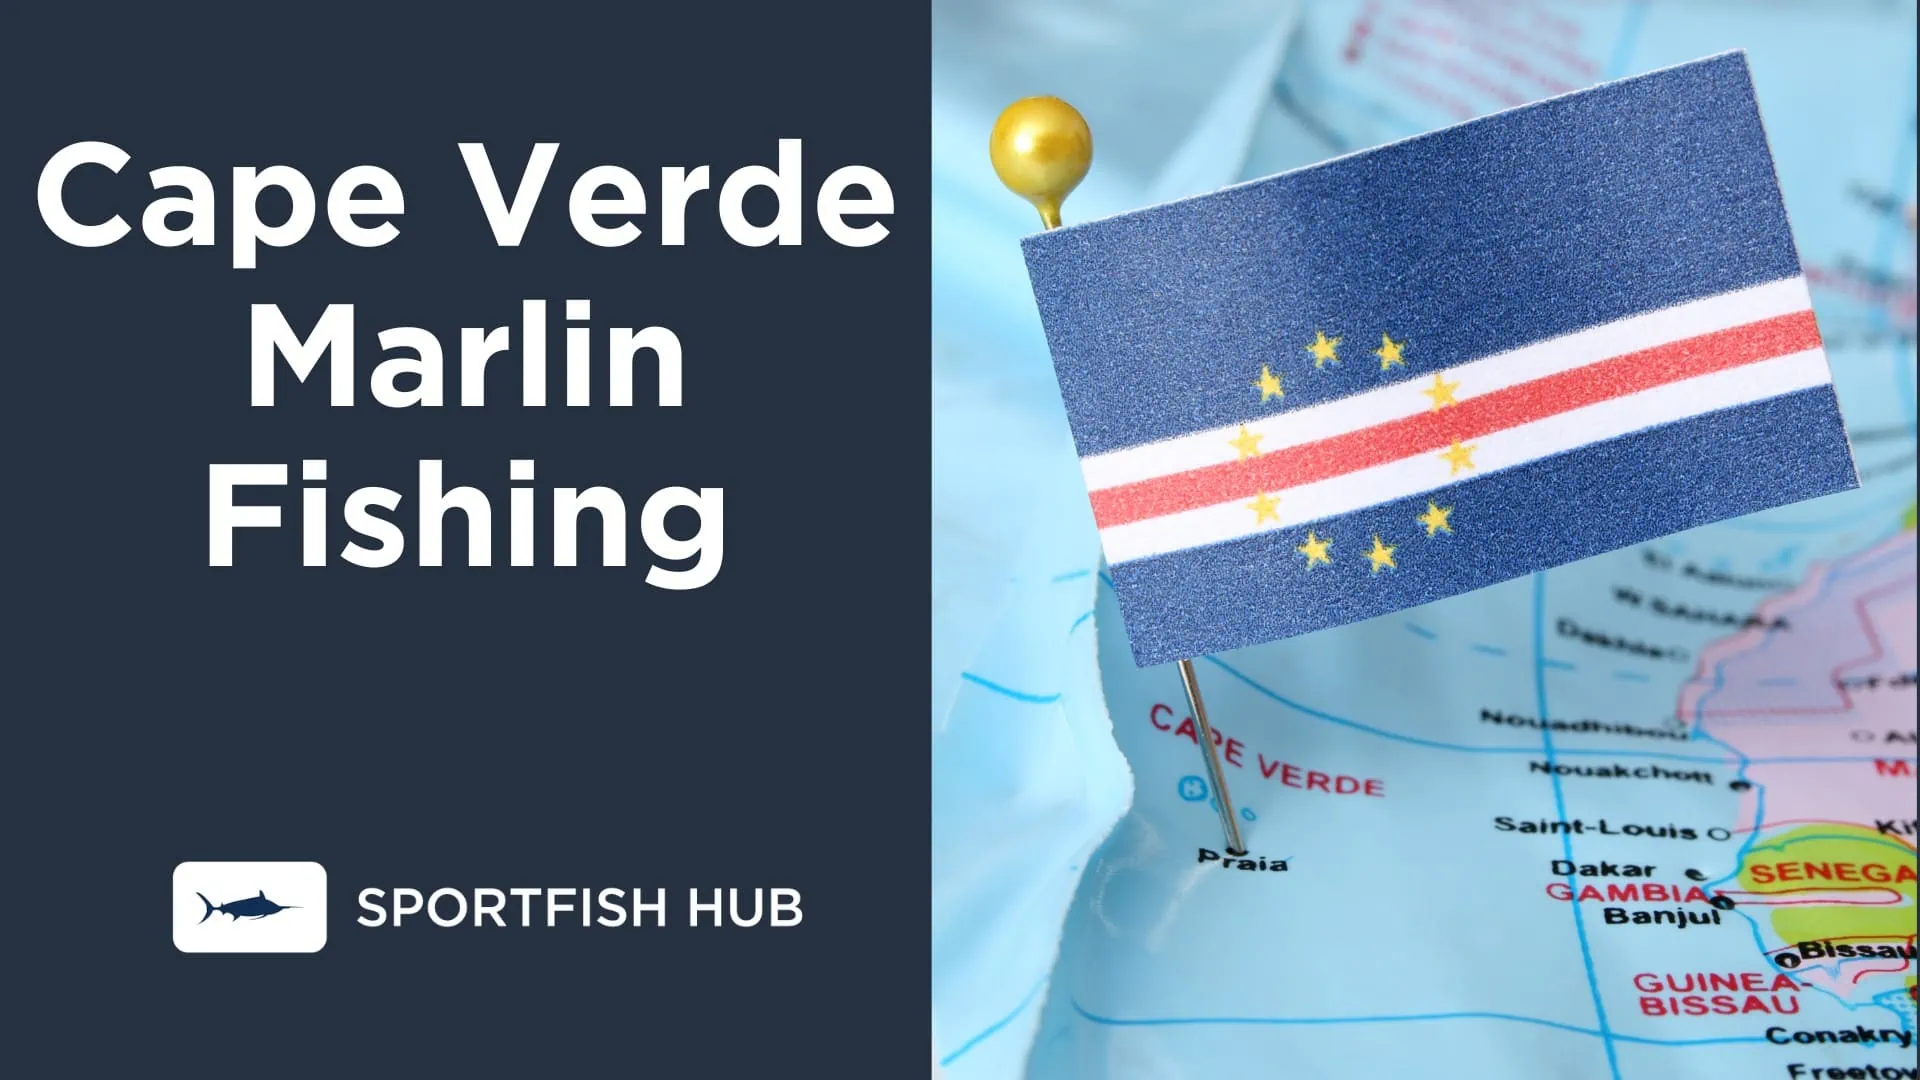 Cape Verde Marlin Fishing